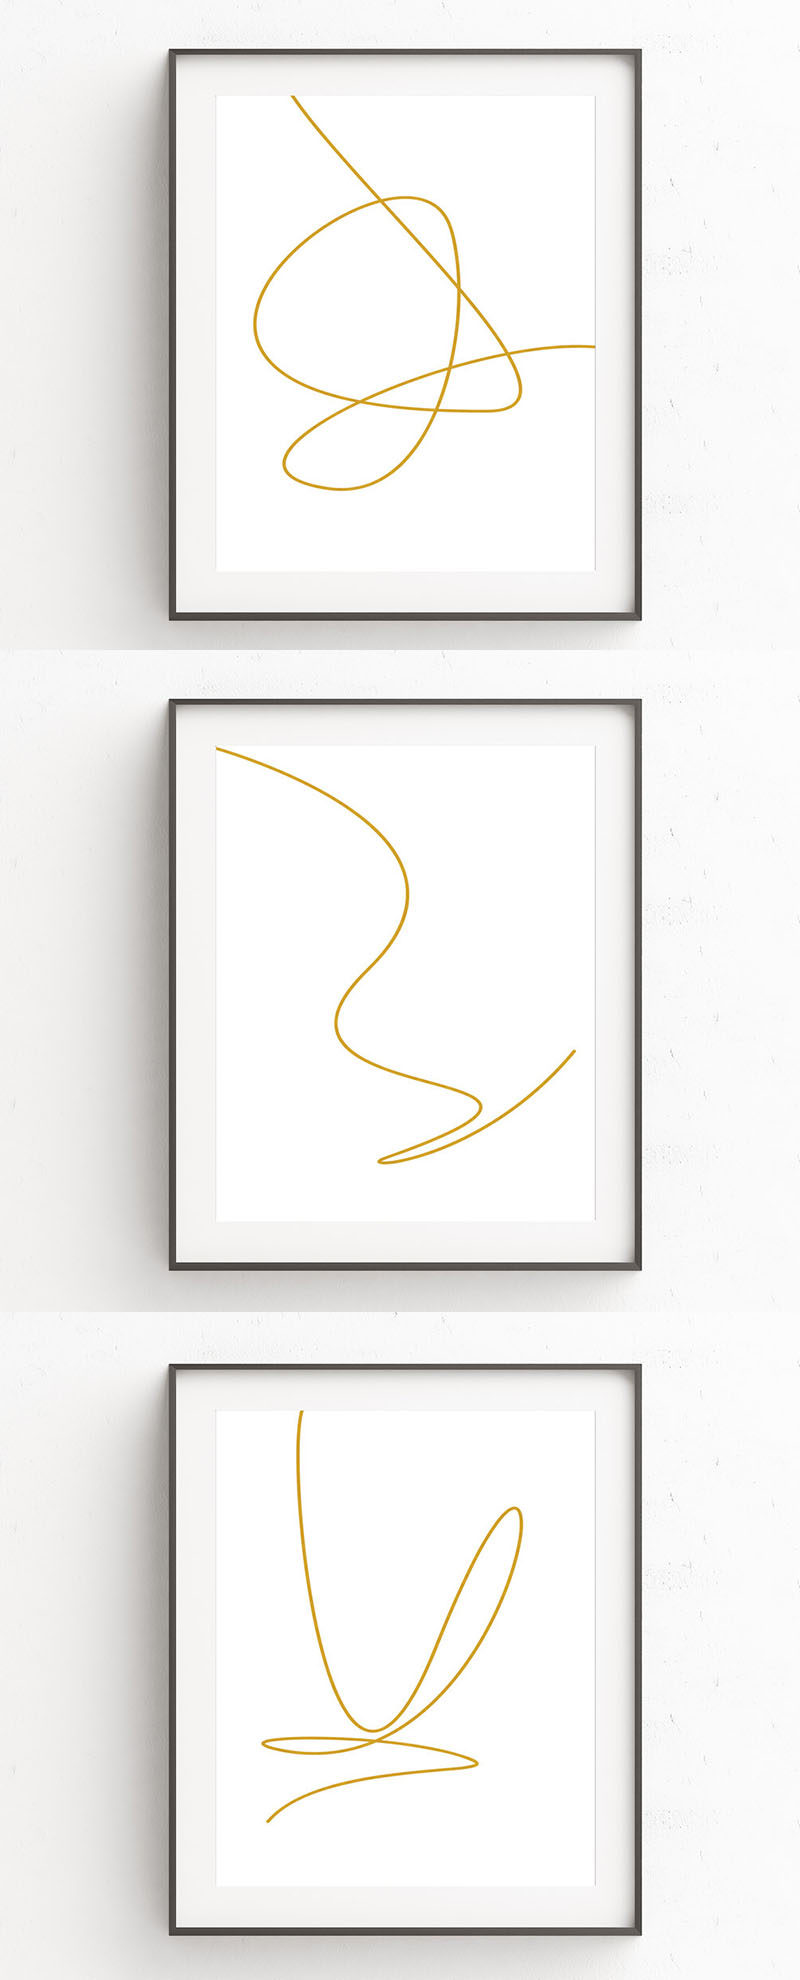 Minimalist Gold Line Art Prints Make A Dramatic Statement